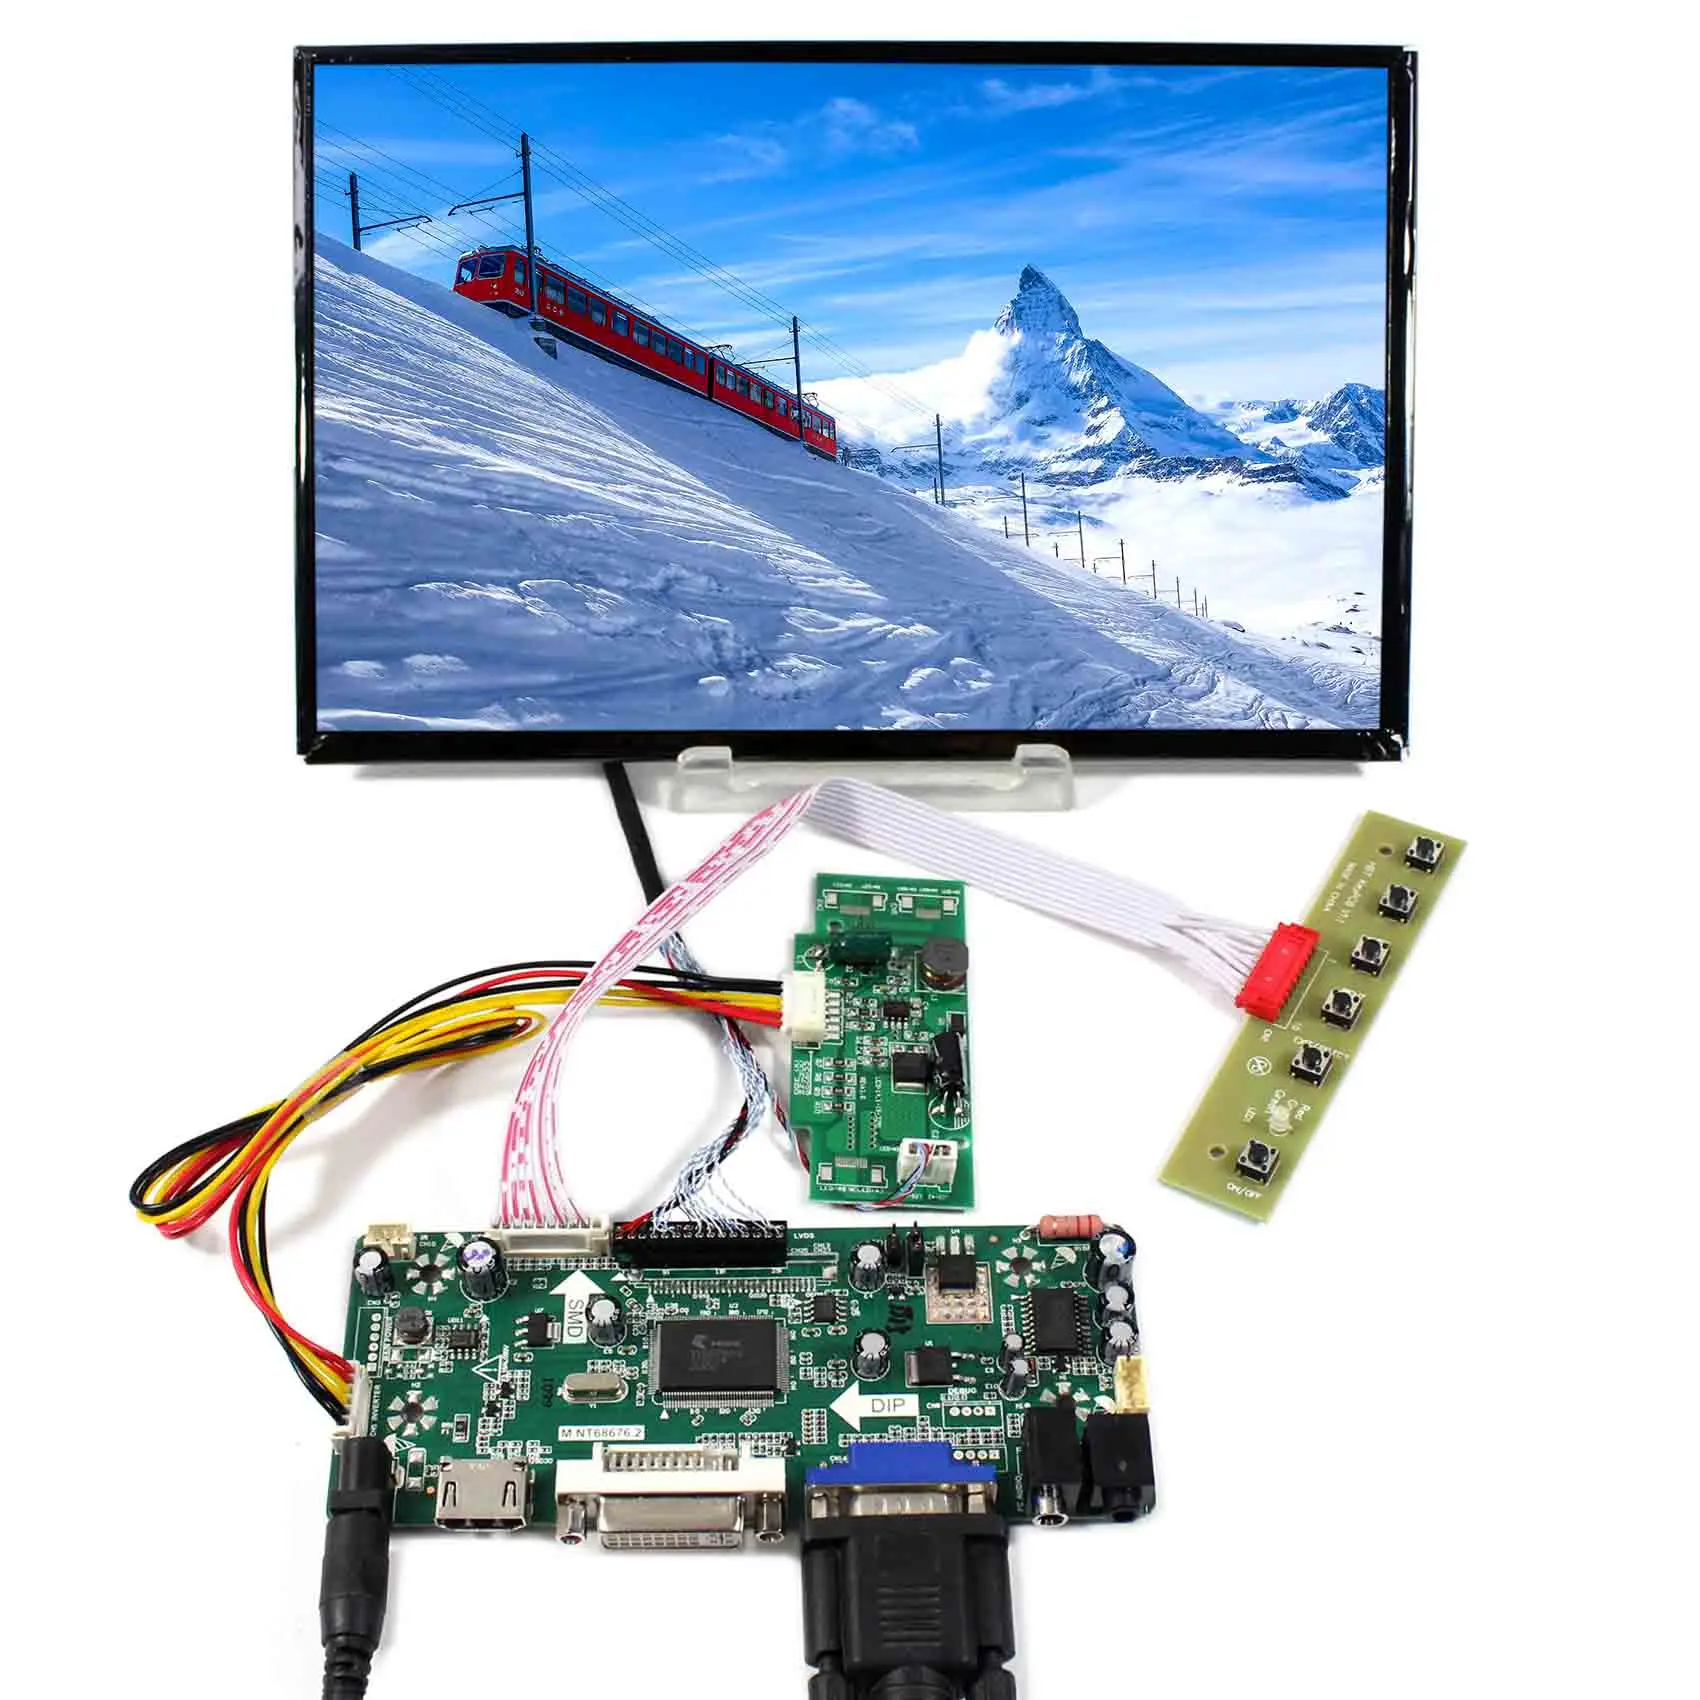 

Display Control 10.1" LCD Screen B101UAN01 HD MI DVI VGA LCD Controller Board 1920X1200 resolution